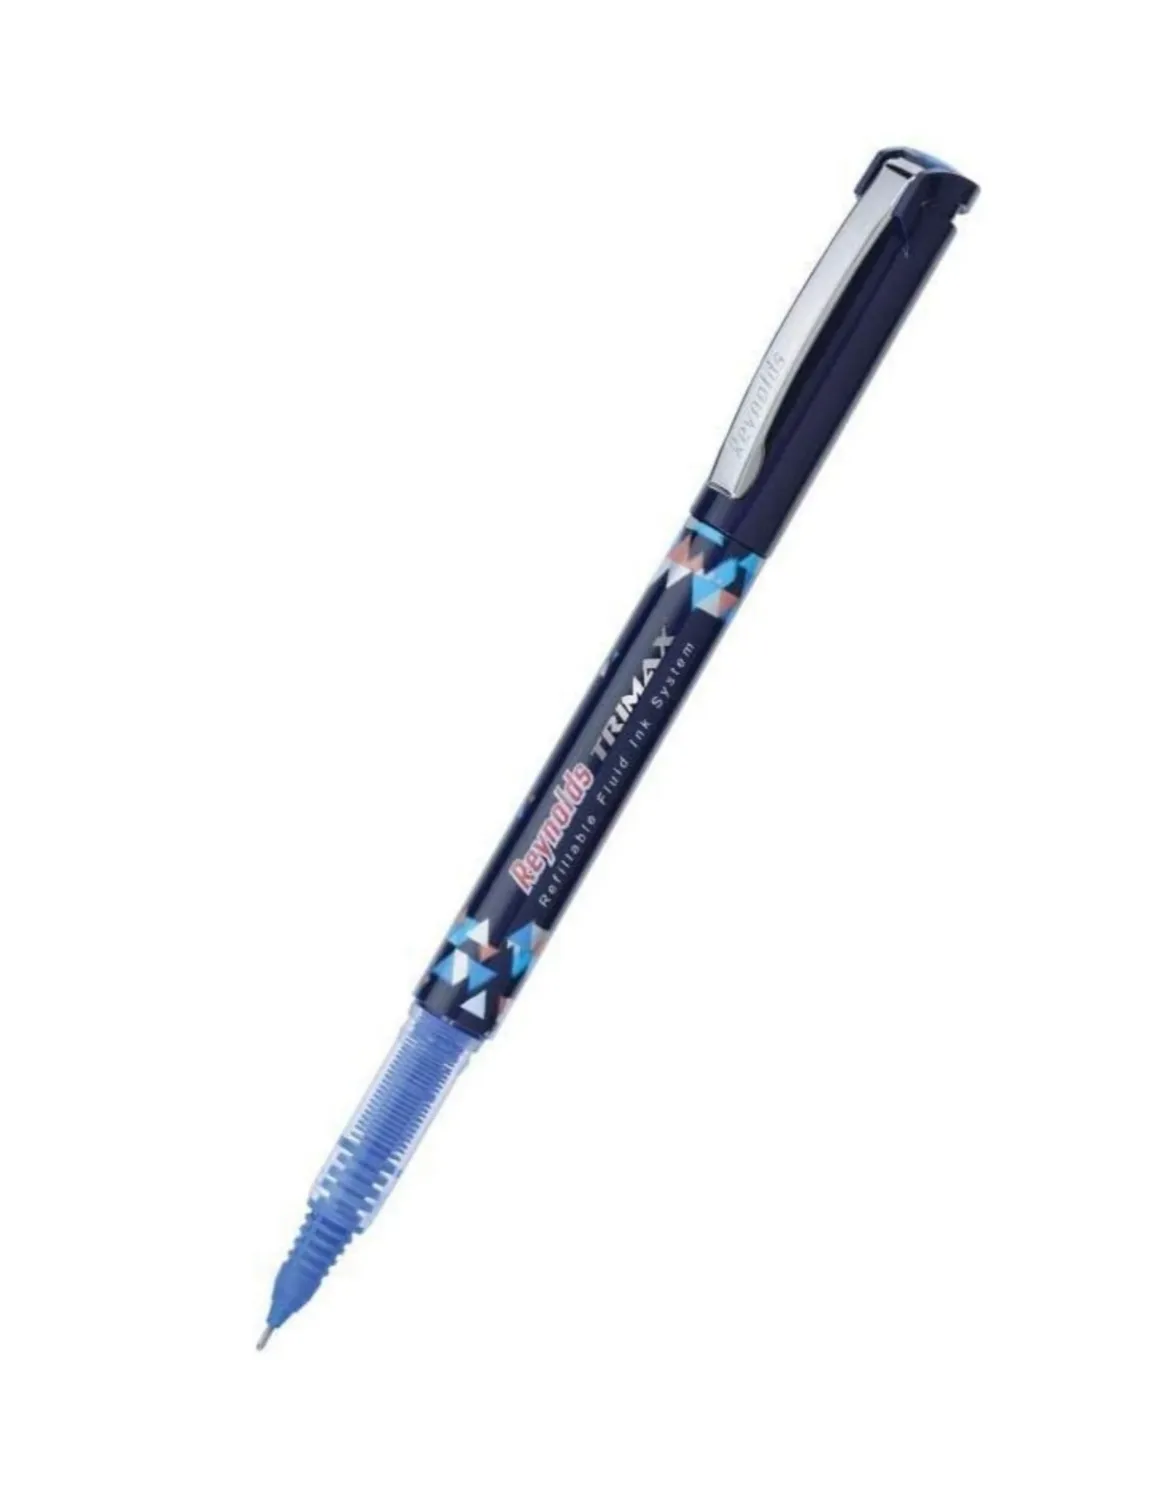 REYNOLDS Trimax Pen With Free Reynolds Glue Stick (Blue Ink) - Pack of 1